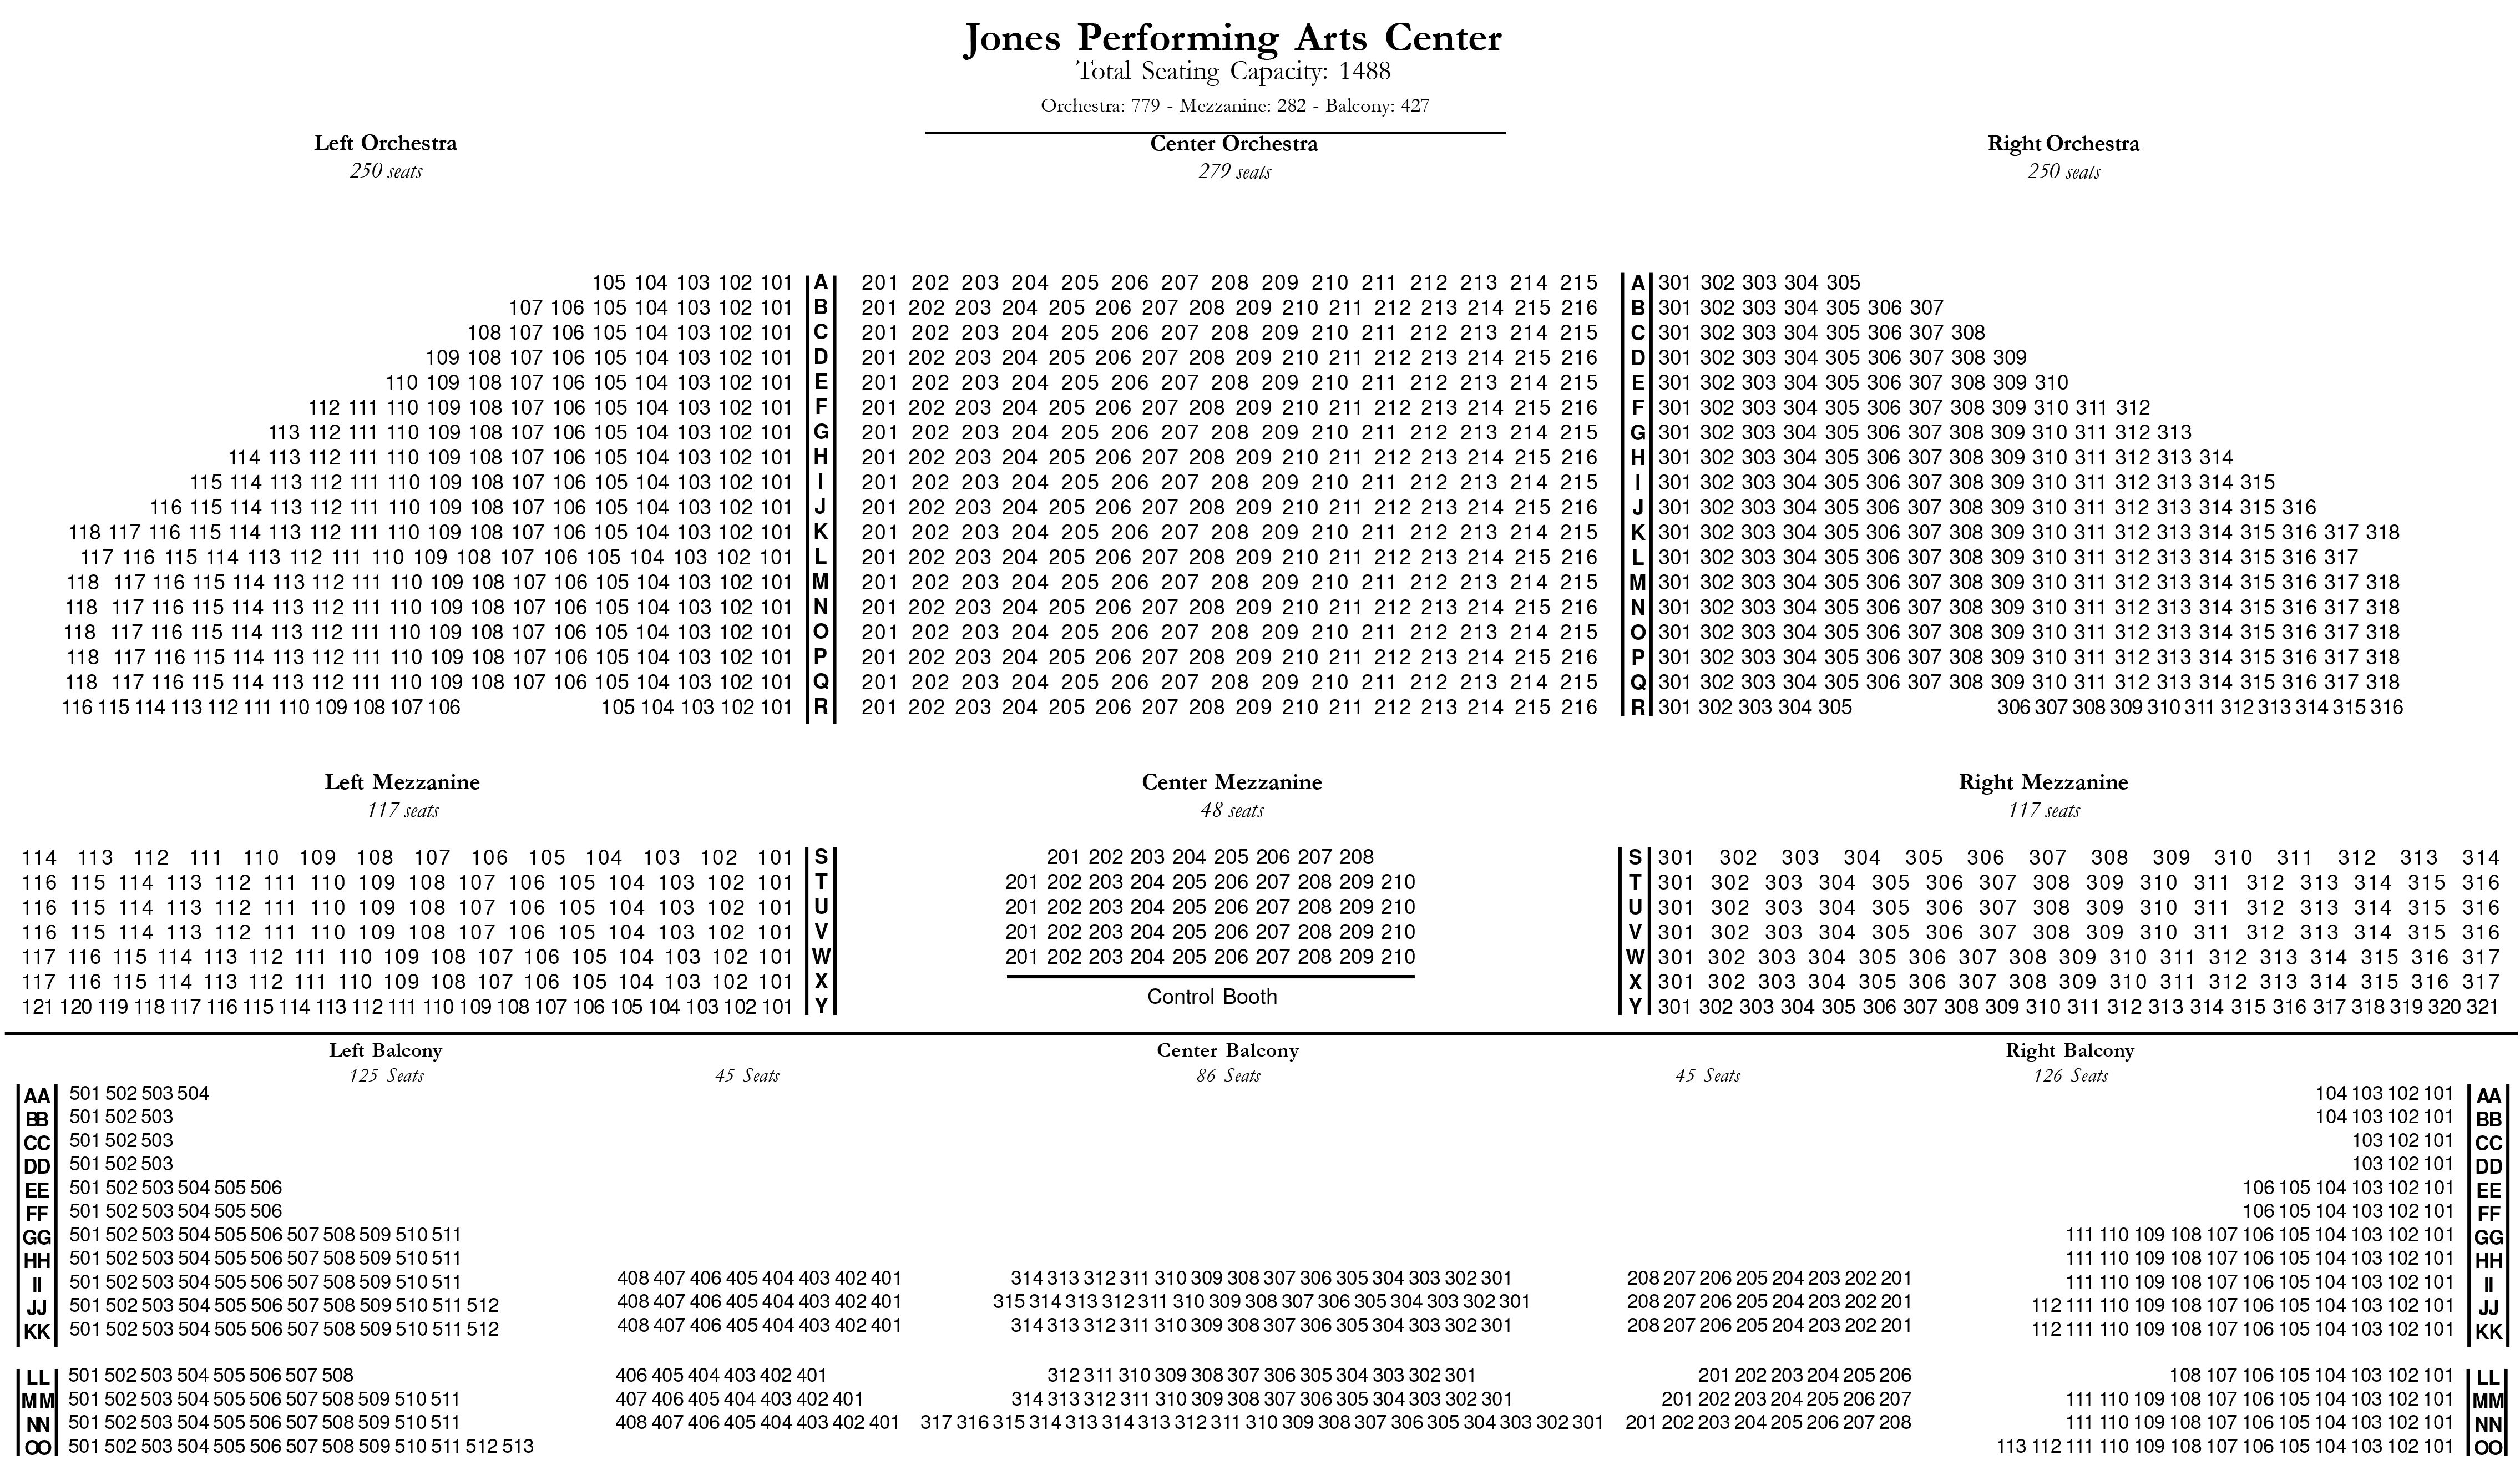 Jones Performing Arts Center Seating Chart